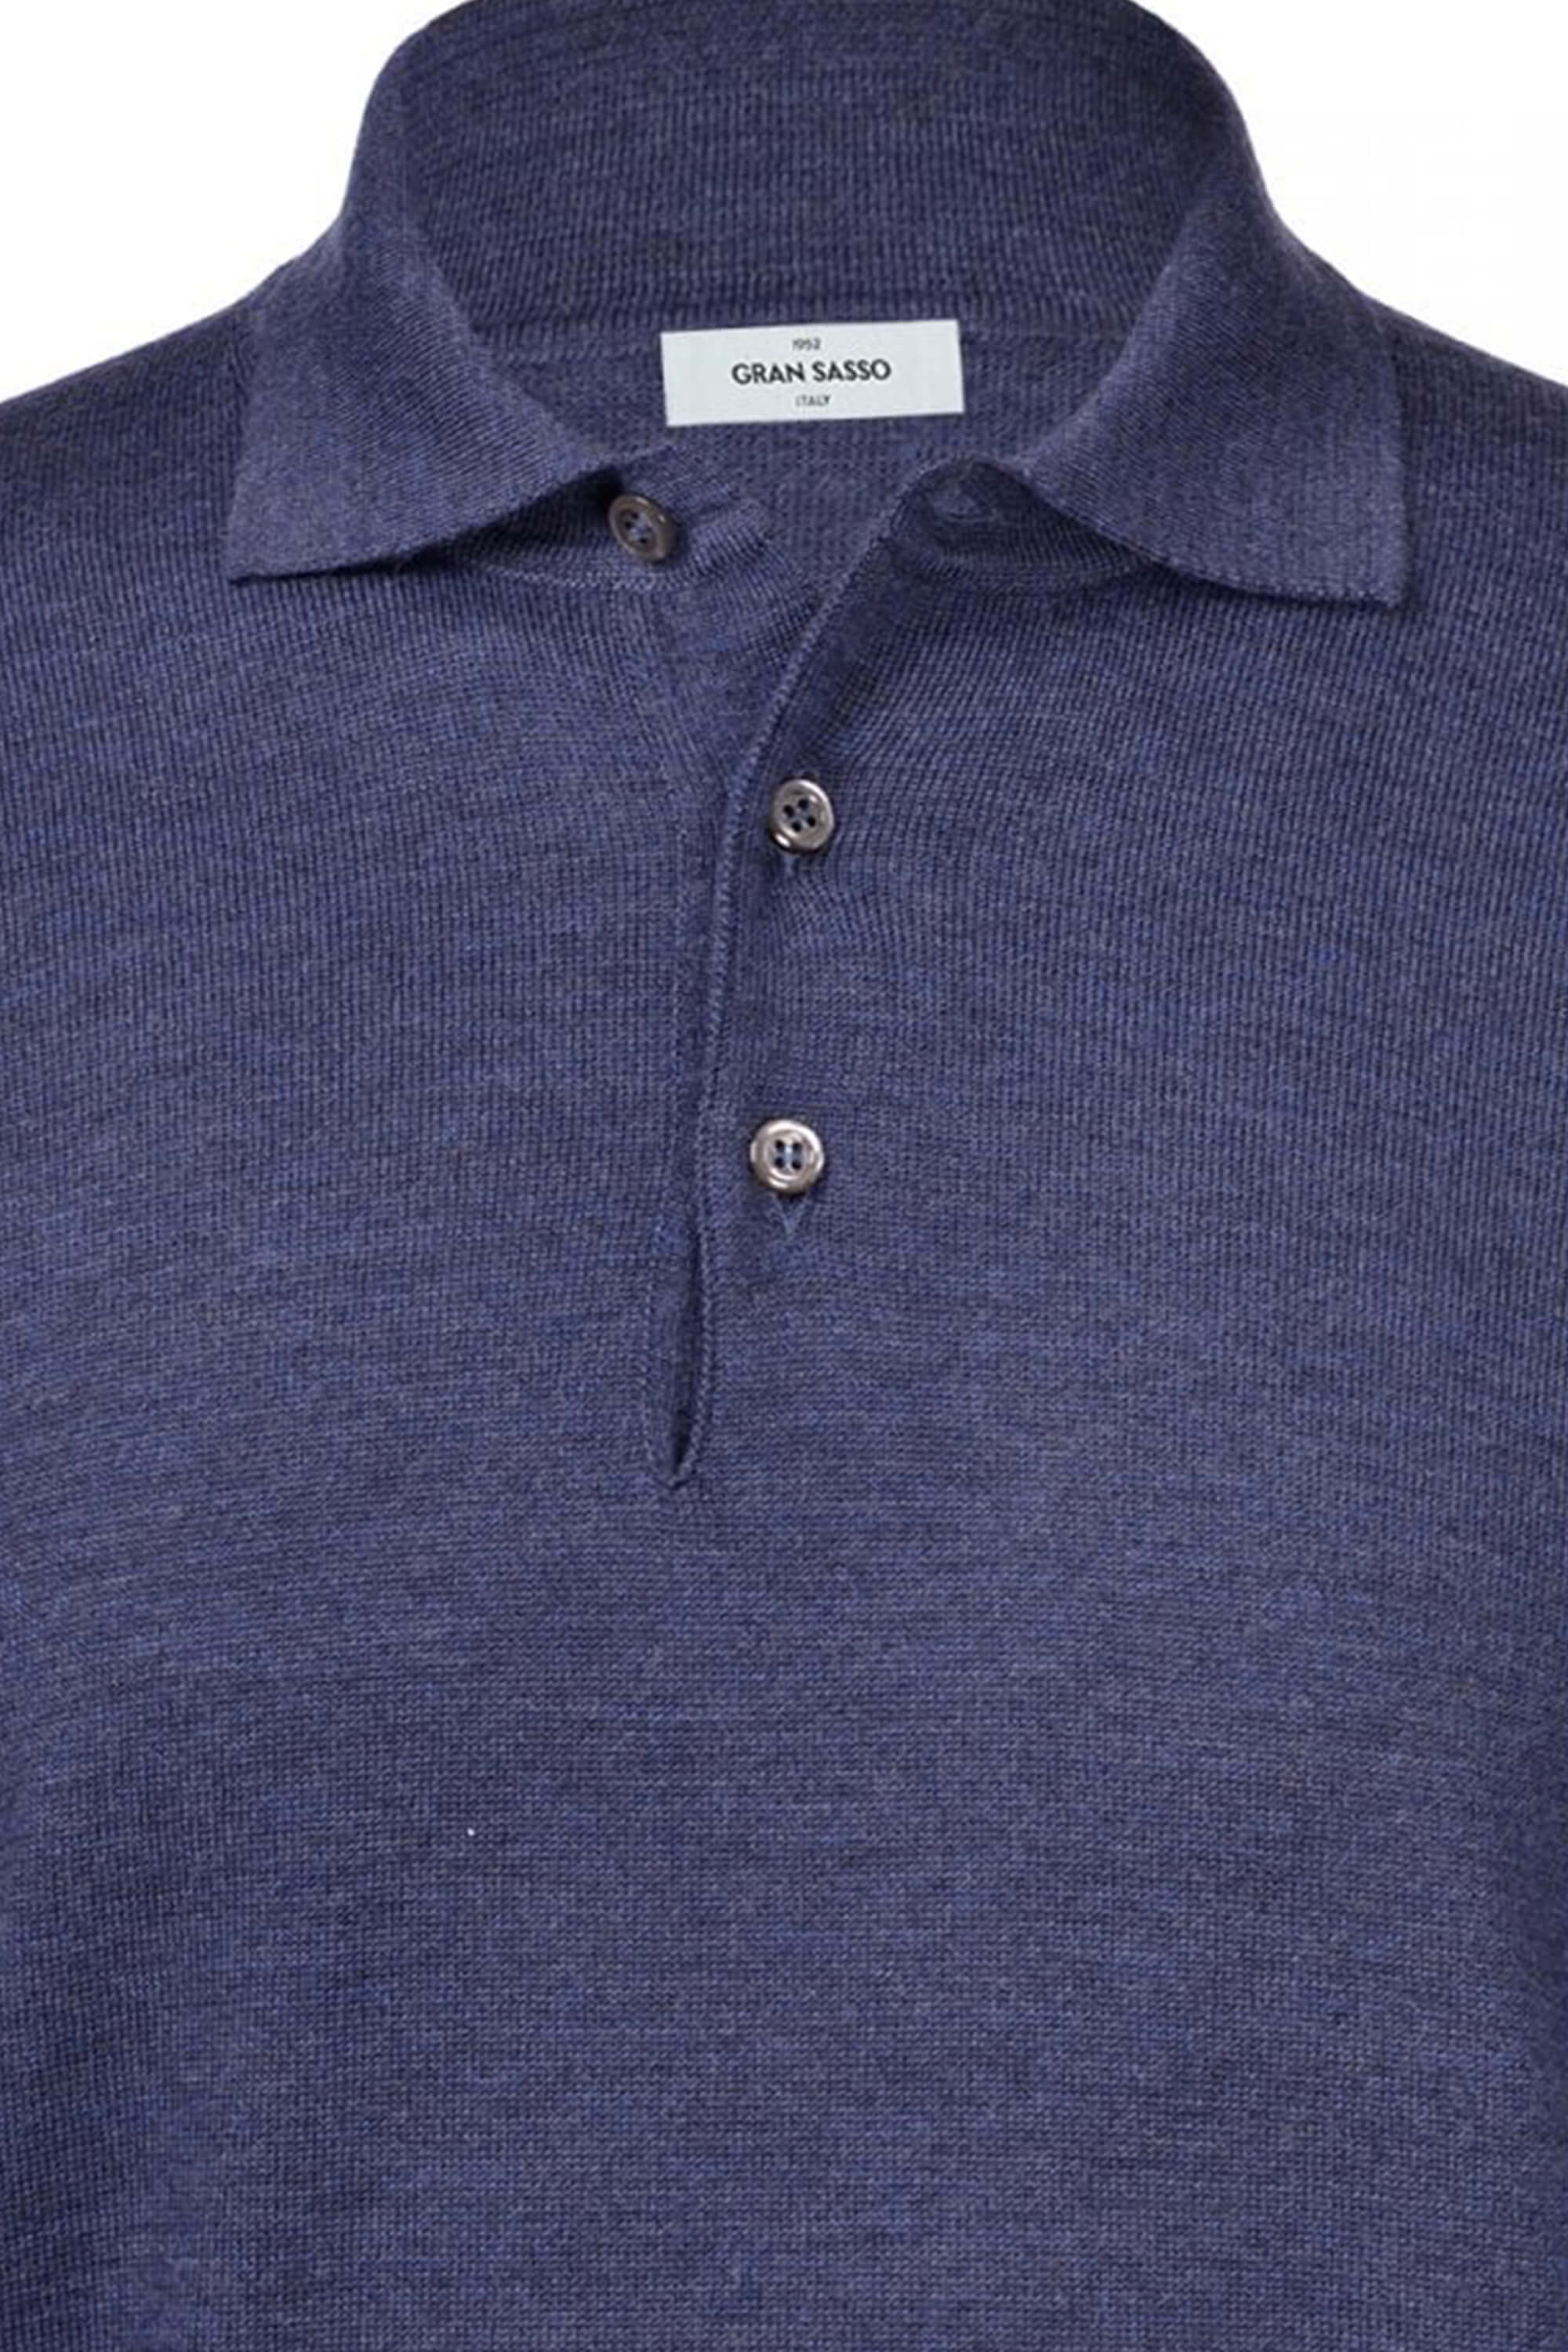 Gran Sasso Merino Wool LS Polo Blue